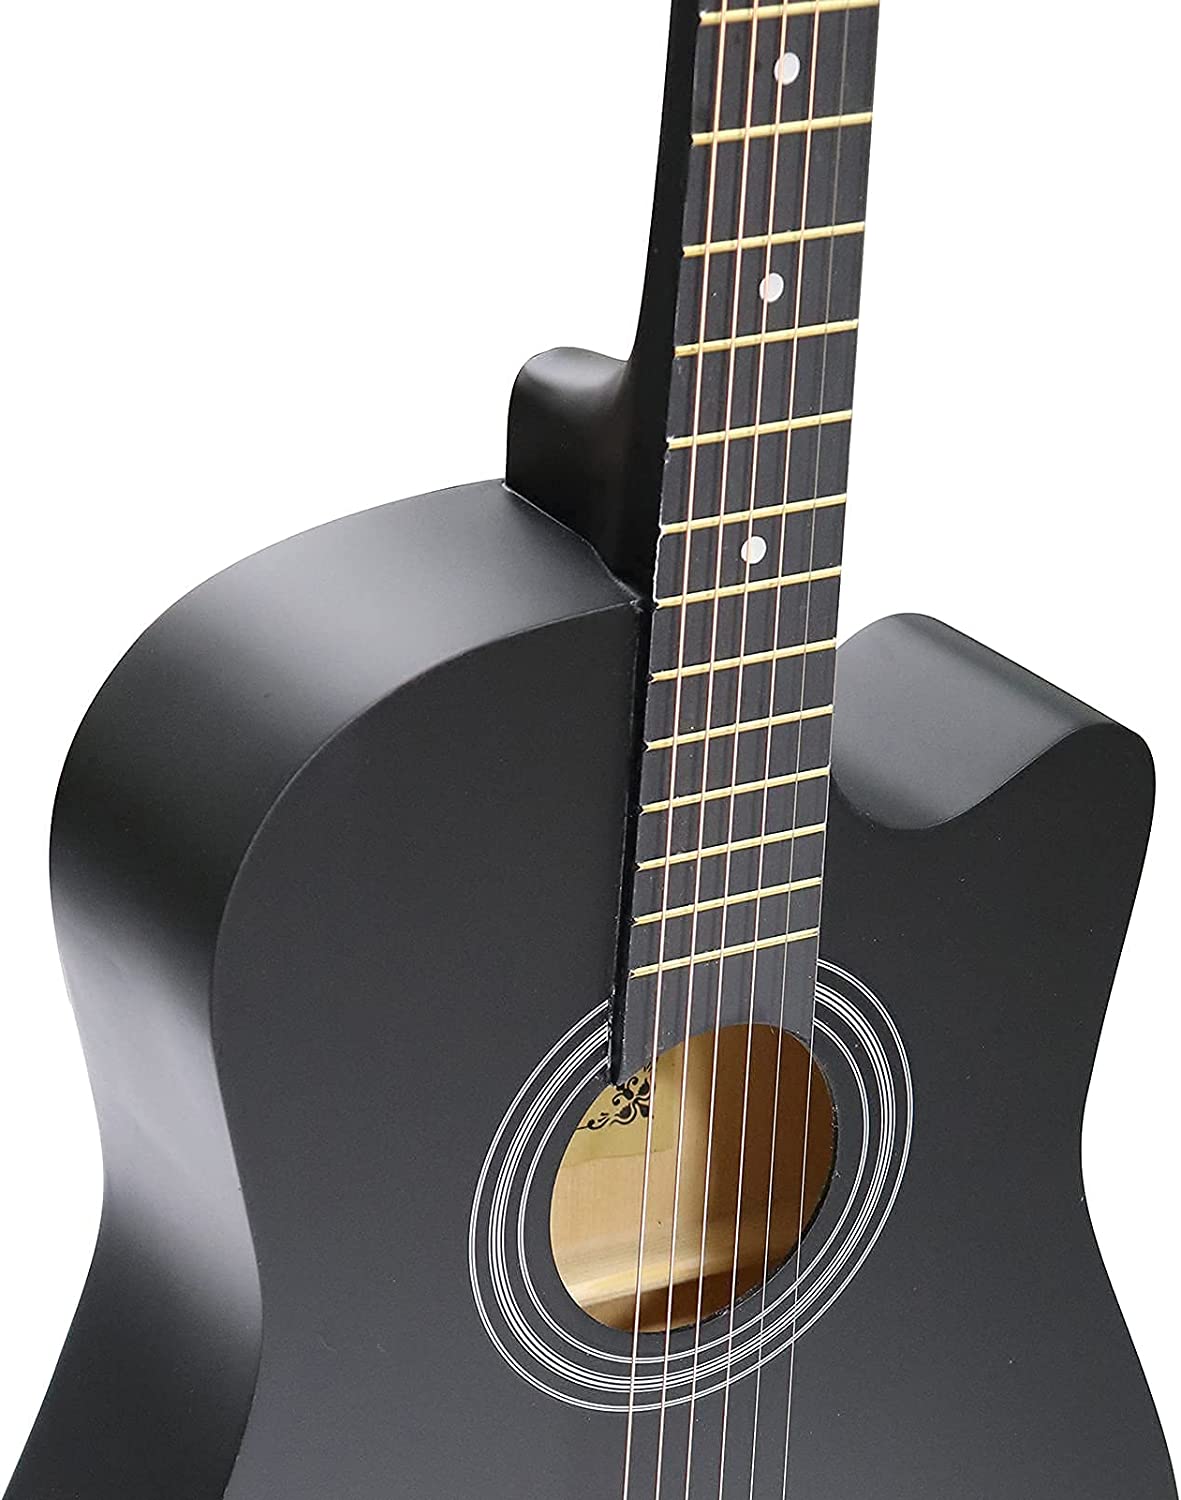 گیتار آکوستیک SHINEDOWN Acoustic Guitar in Full Size 38in - ارسال ۱۰ الی ۱۵ روز کاری